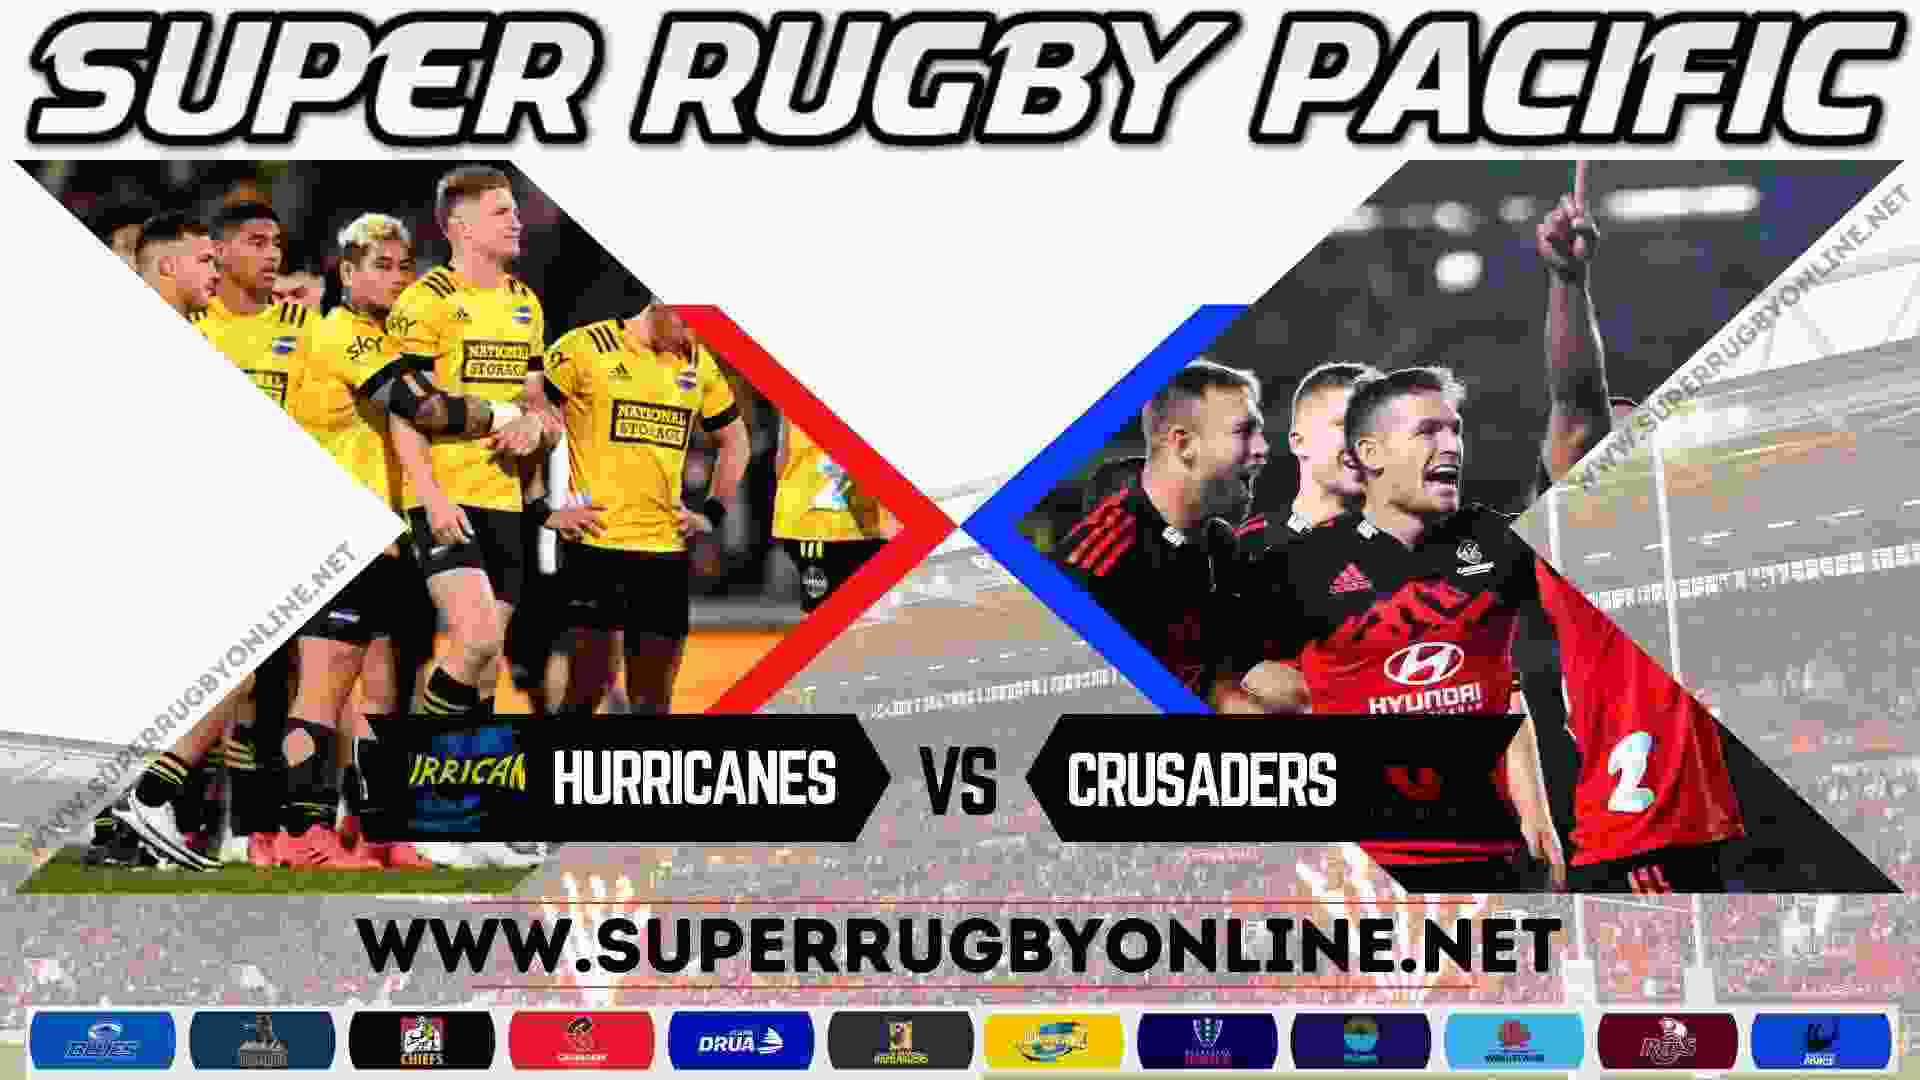 hurricanes-vs-crusaders-super-rugby-live-stream